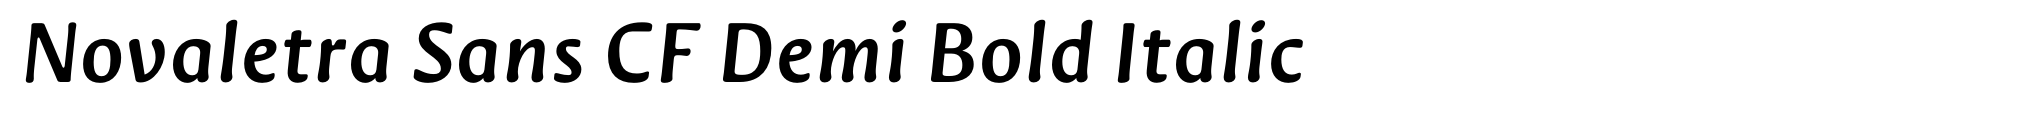 Novaletra Sans CF Demi Bold Italic image